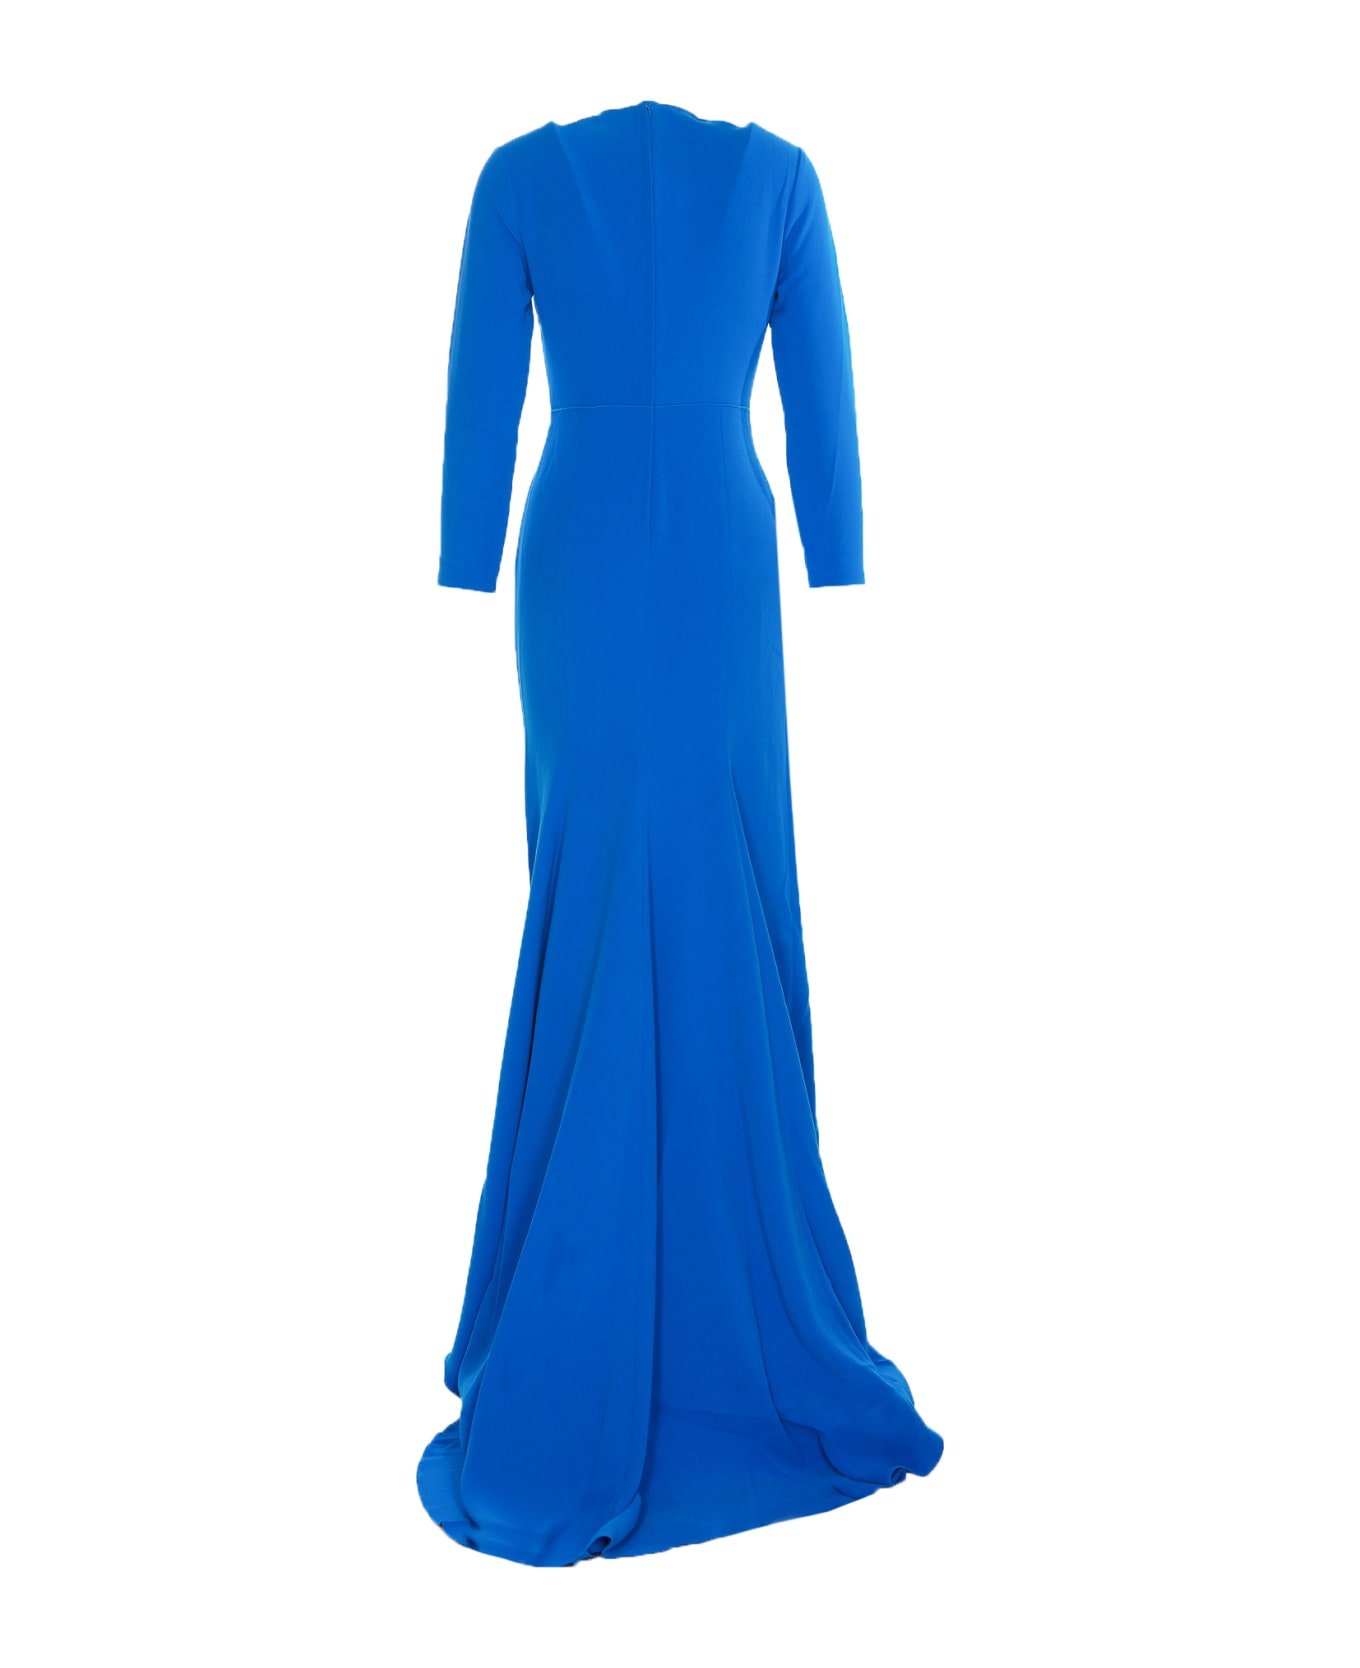 Solace London Nia Maxi Dress - Blue